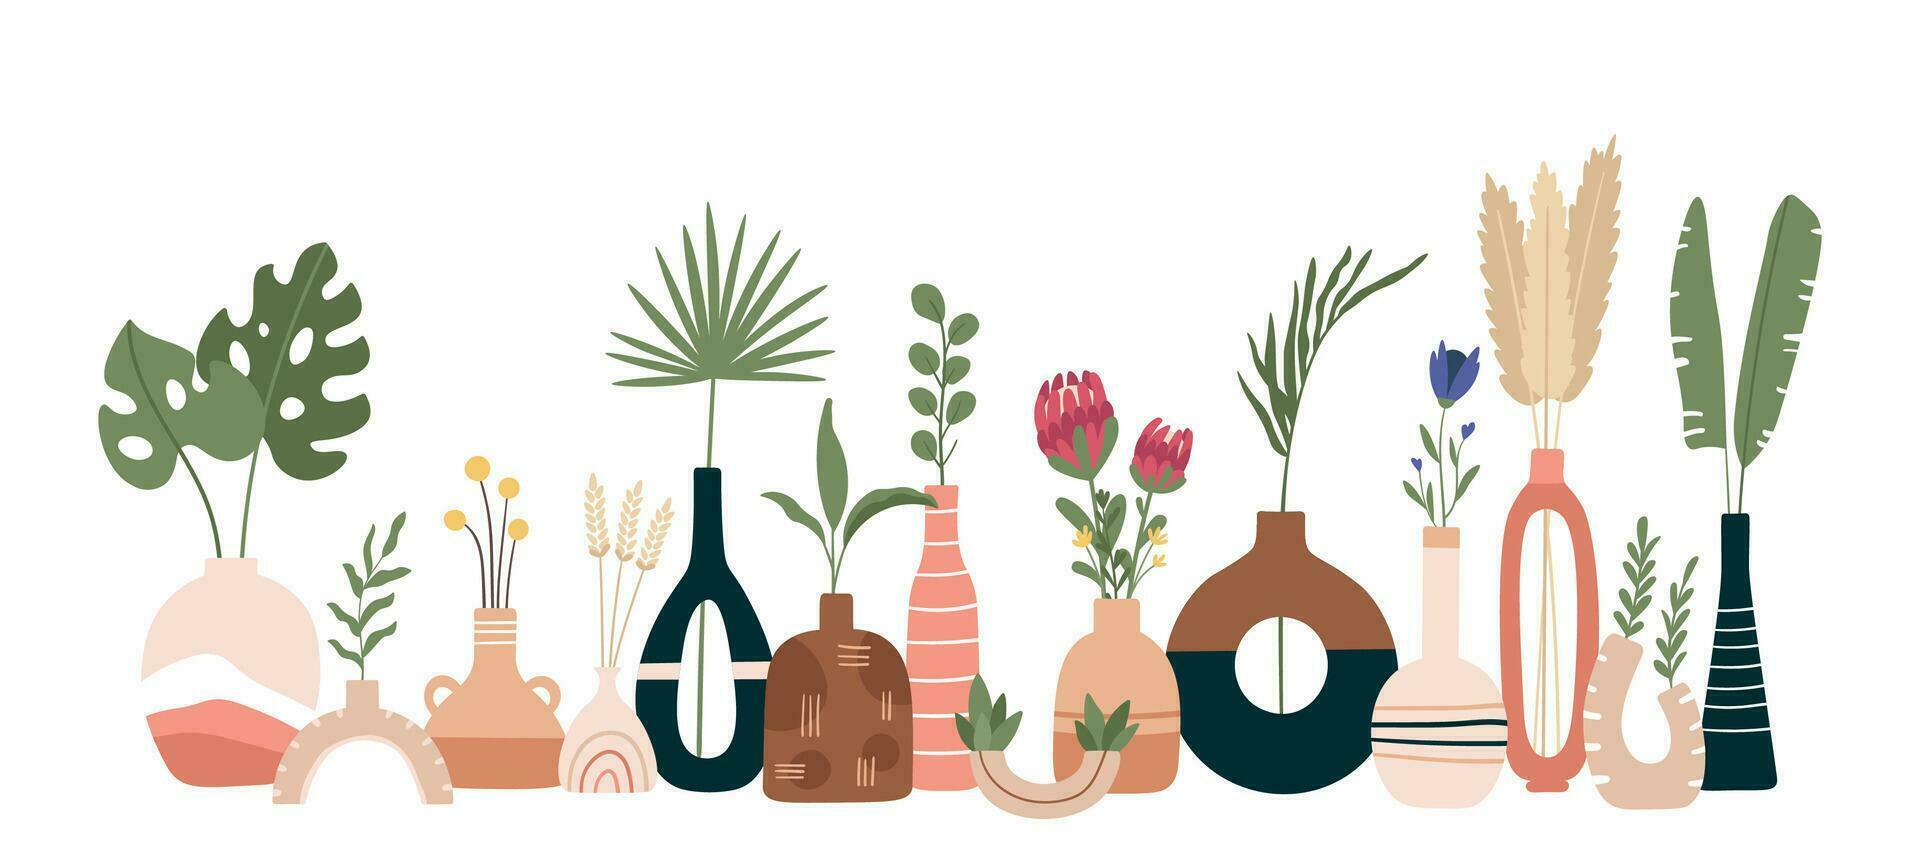 Ceramic vase poster. Scandinavian abstract art with vases, pots and jugs. Handmade pottery kitchen banner. Minimal modern flat vector print